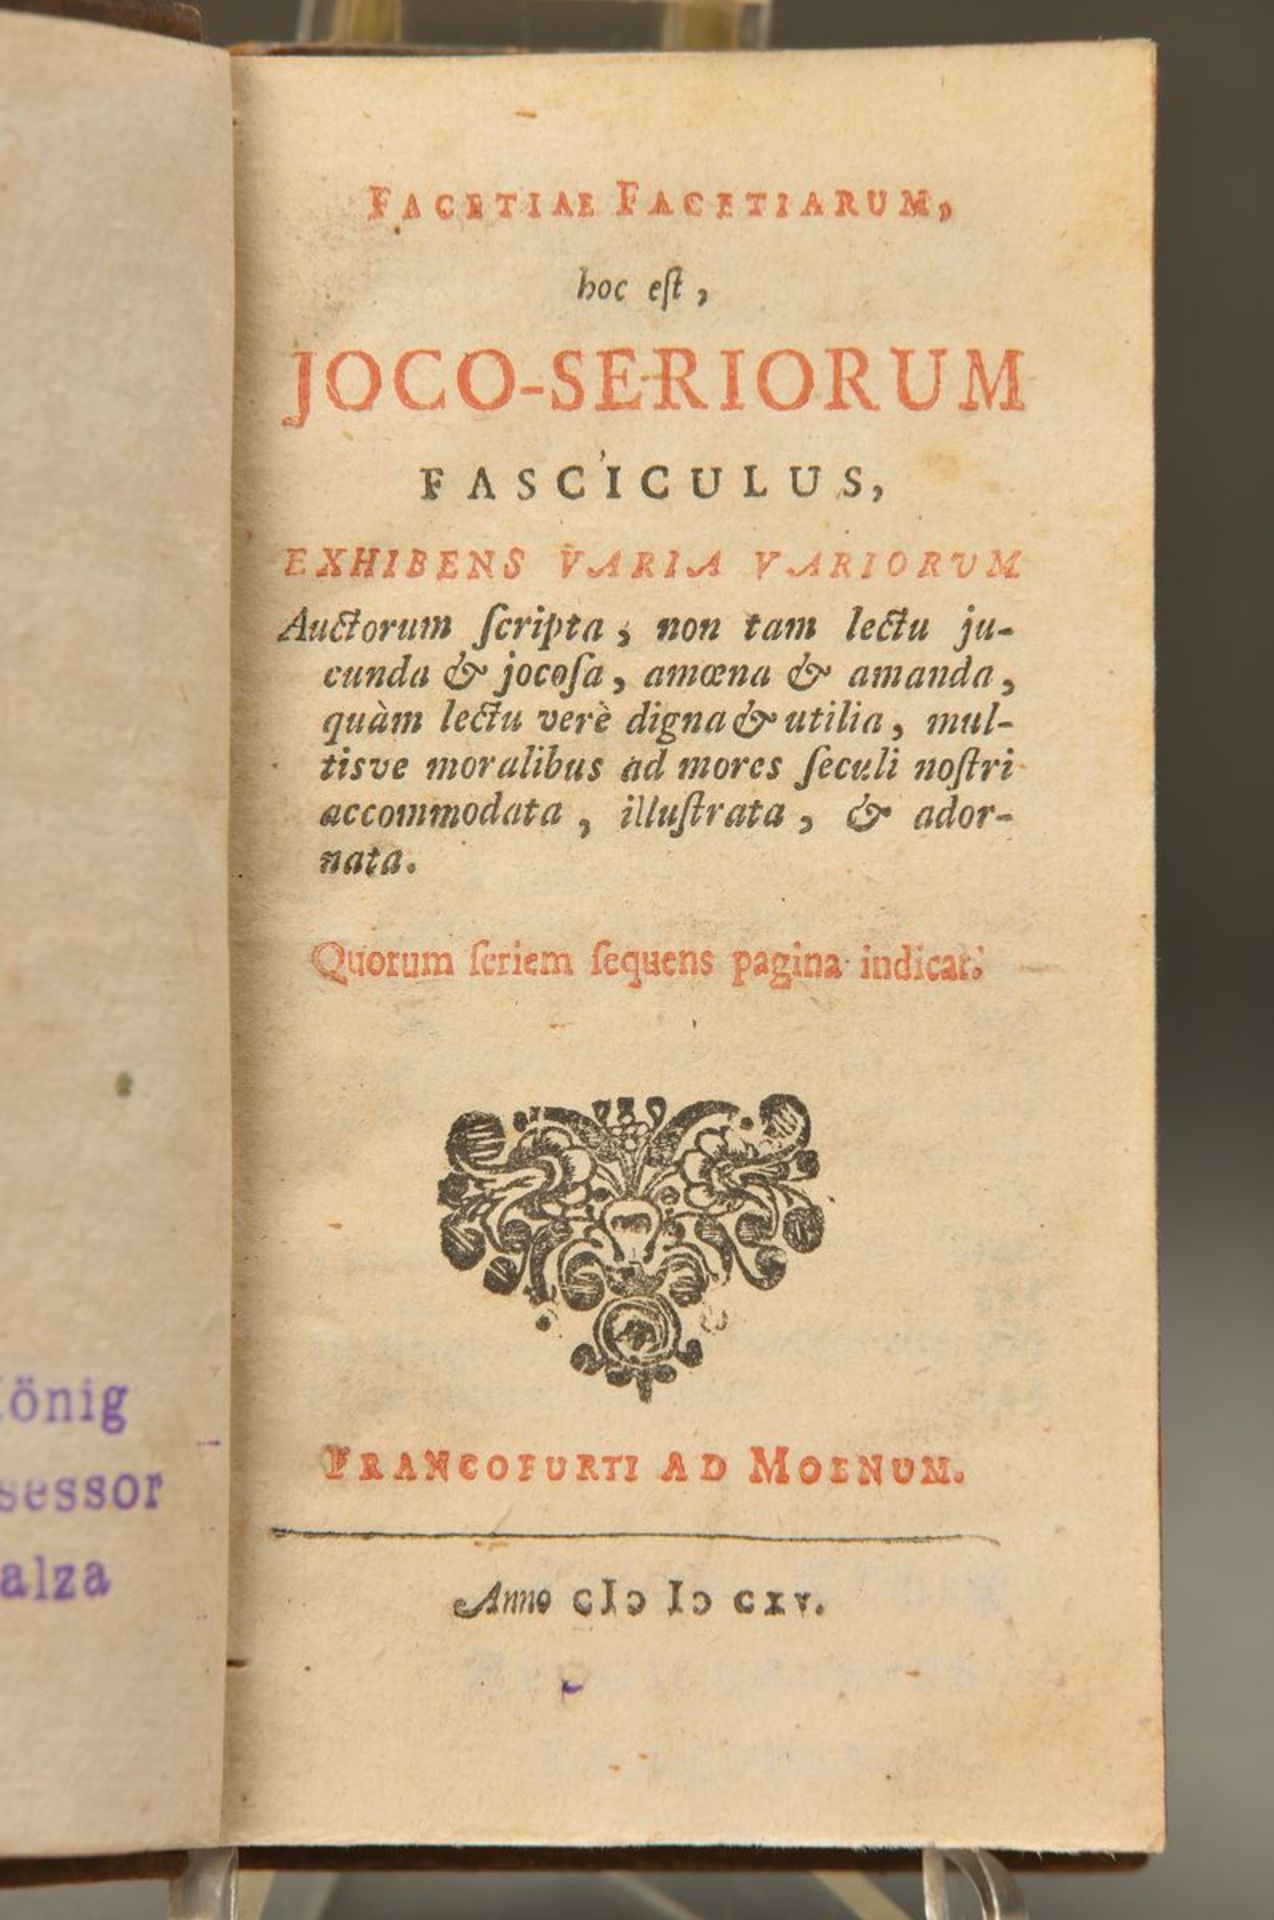 Joco-seriorum, Exhibens Varia, Frankfurt, 1765, Ledereinband, ca. 452 Seiten, durchgehend